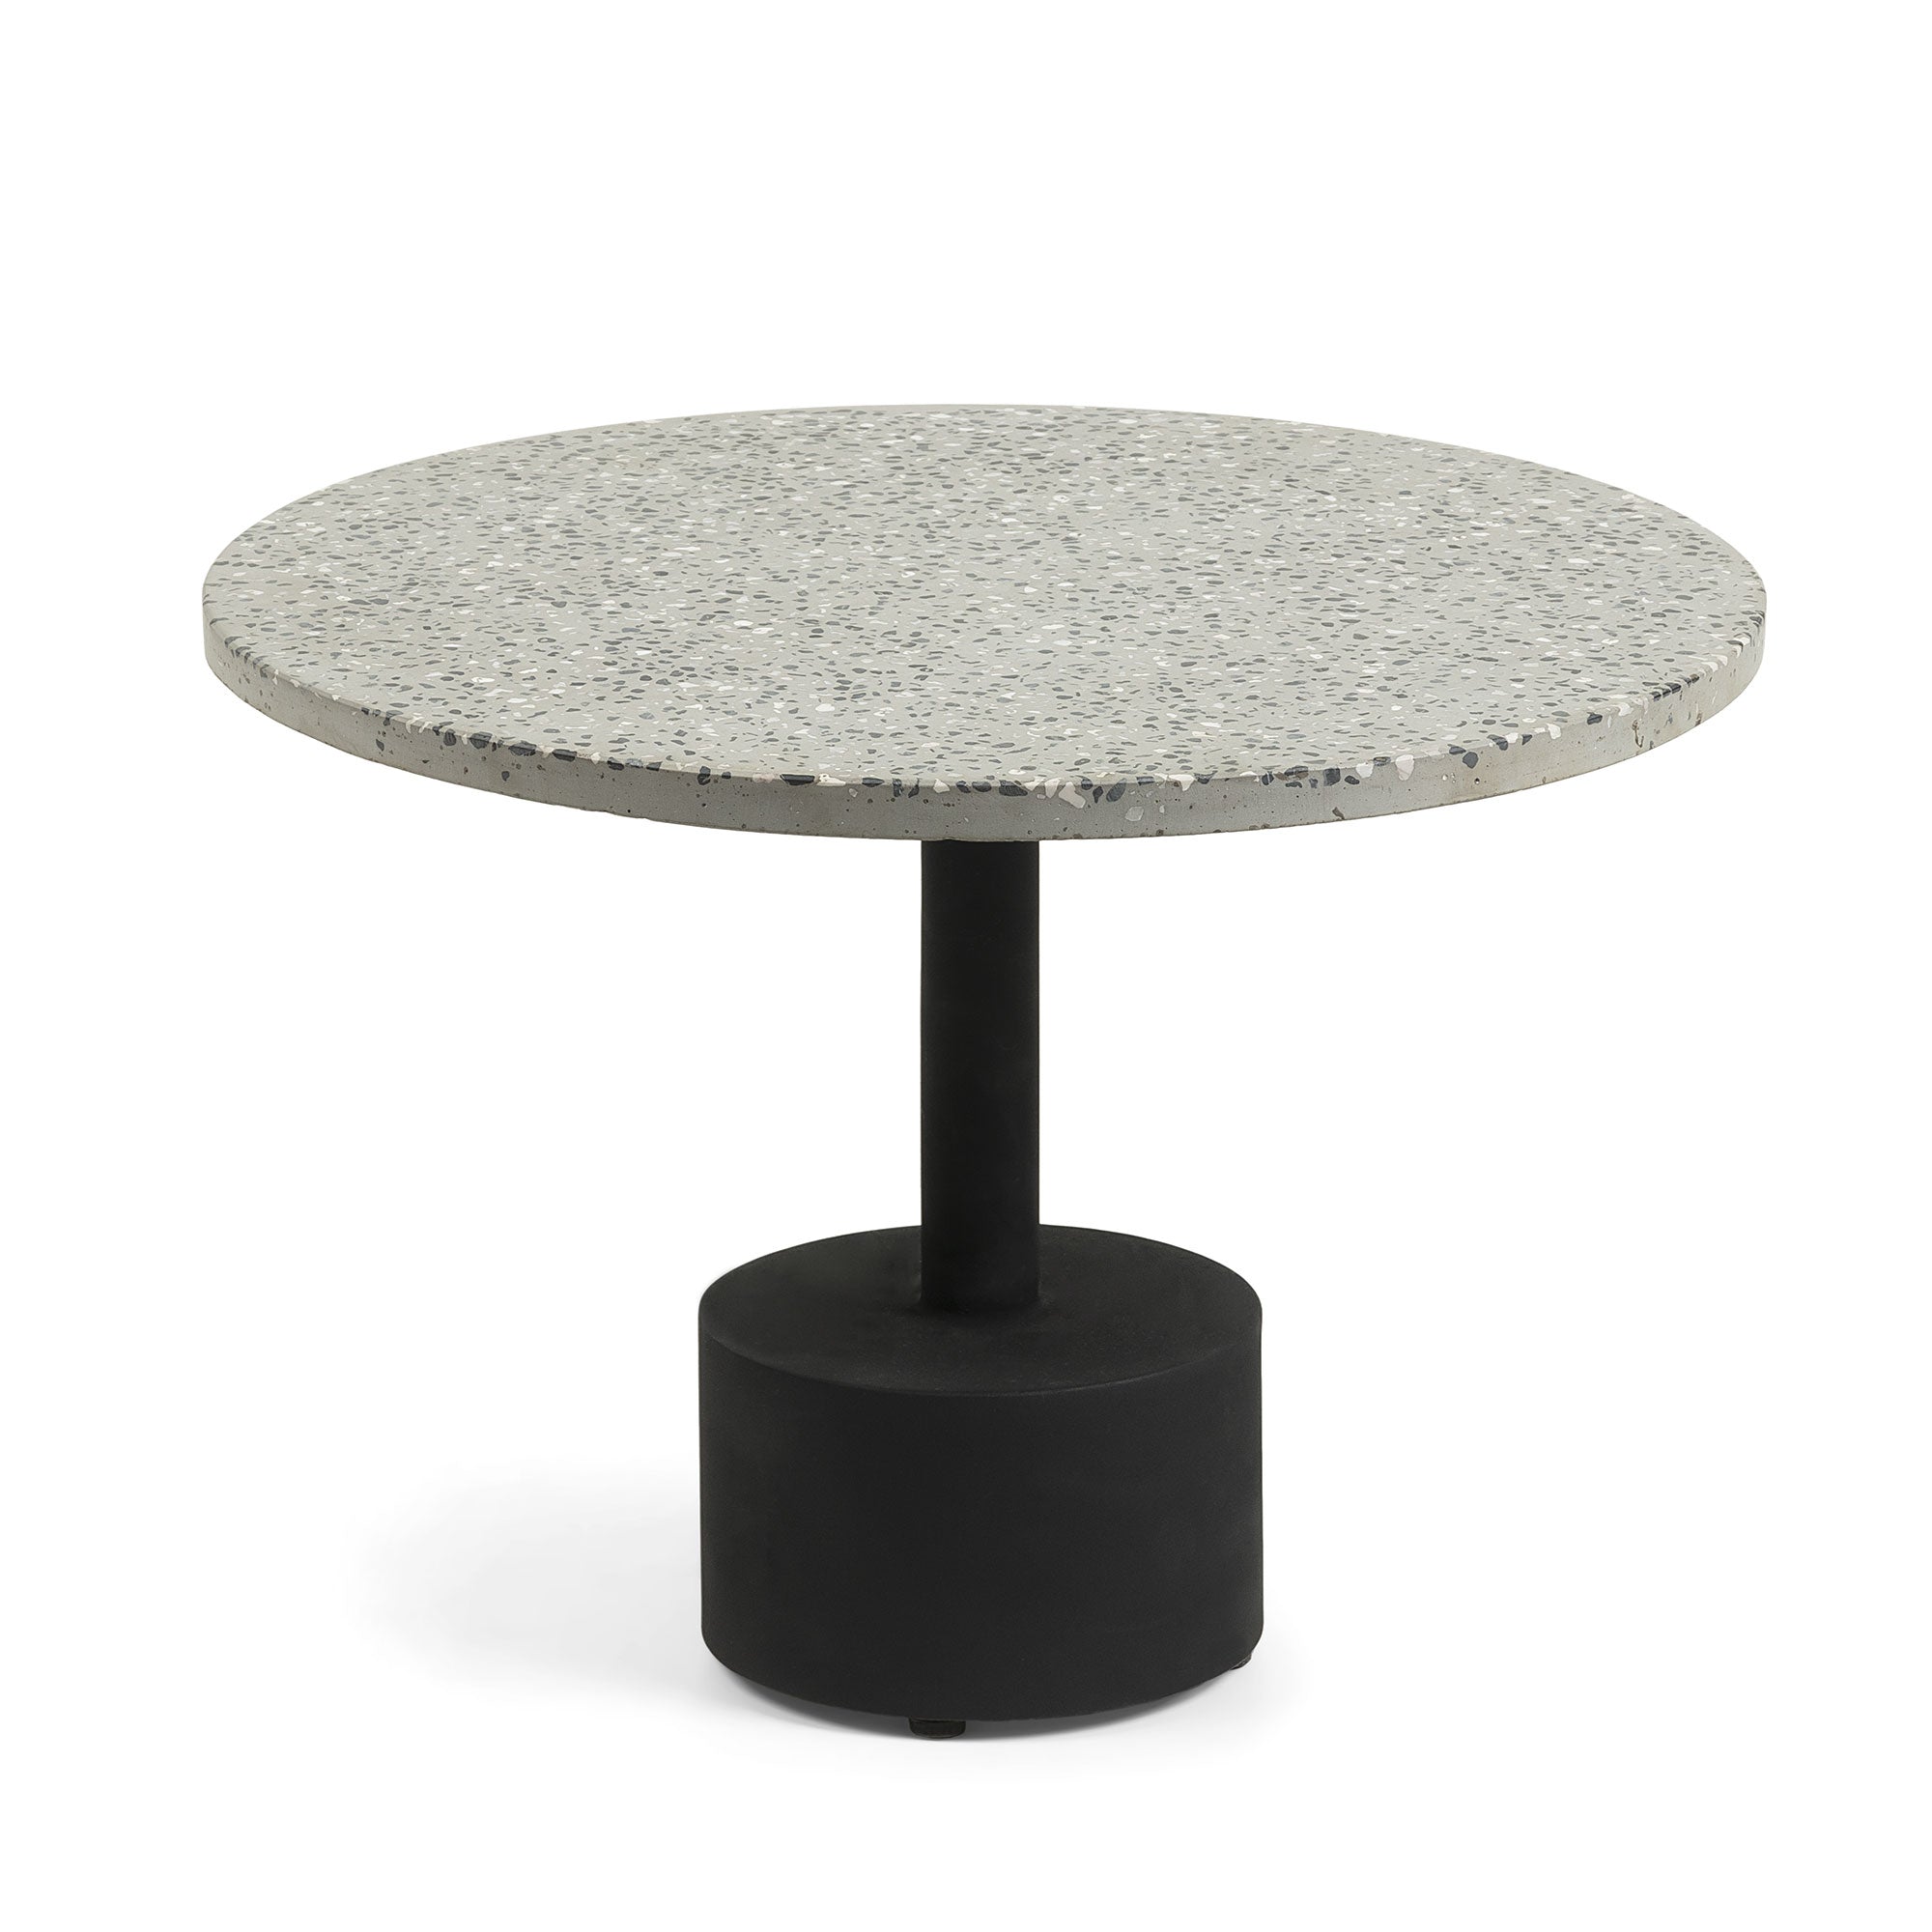 Delano grey terrazzo side table with steel legs in a black finish, Ø 55 cm